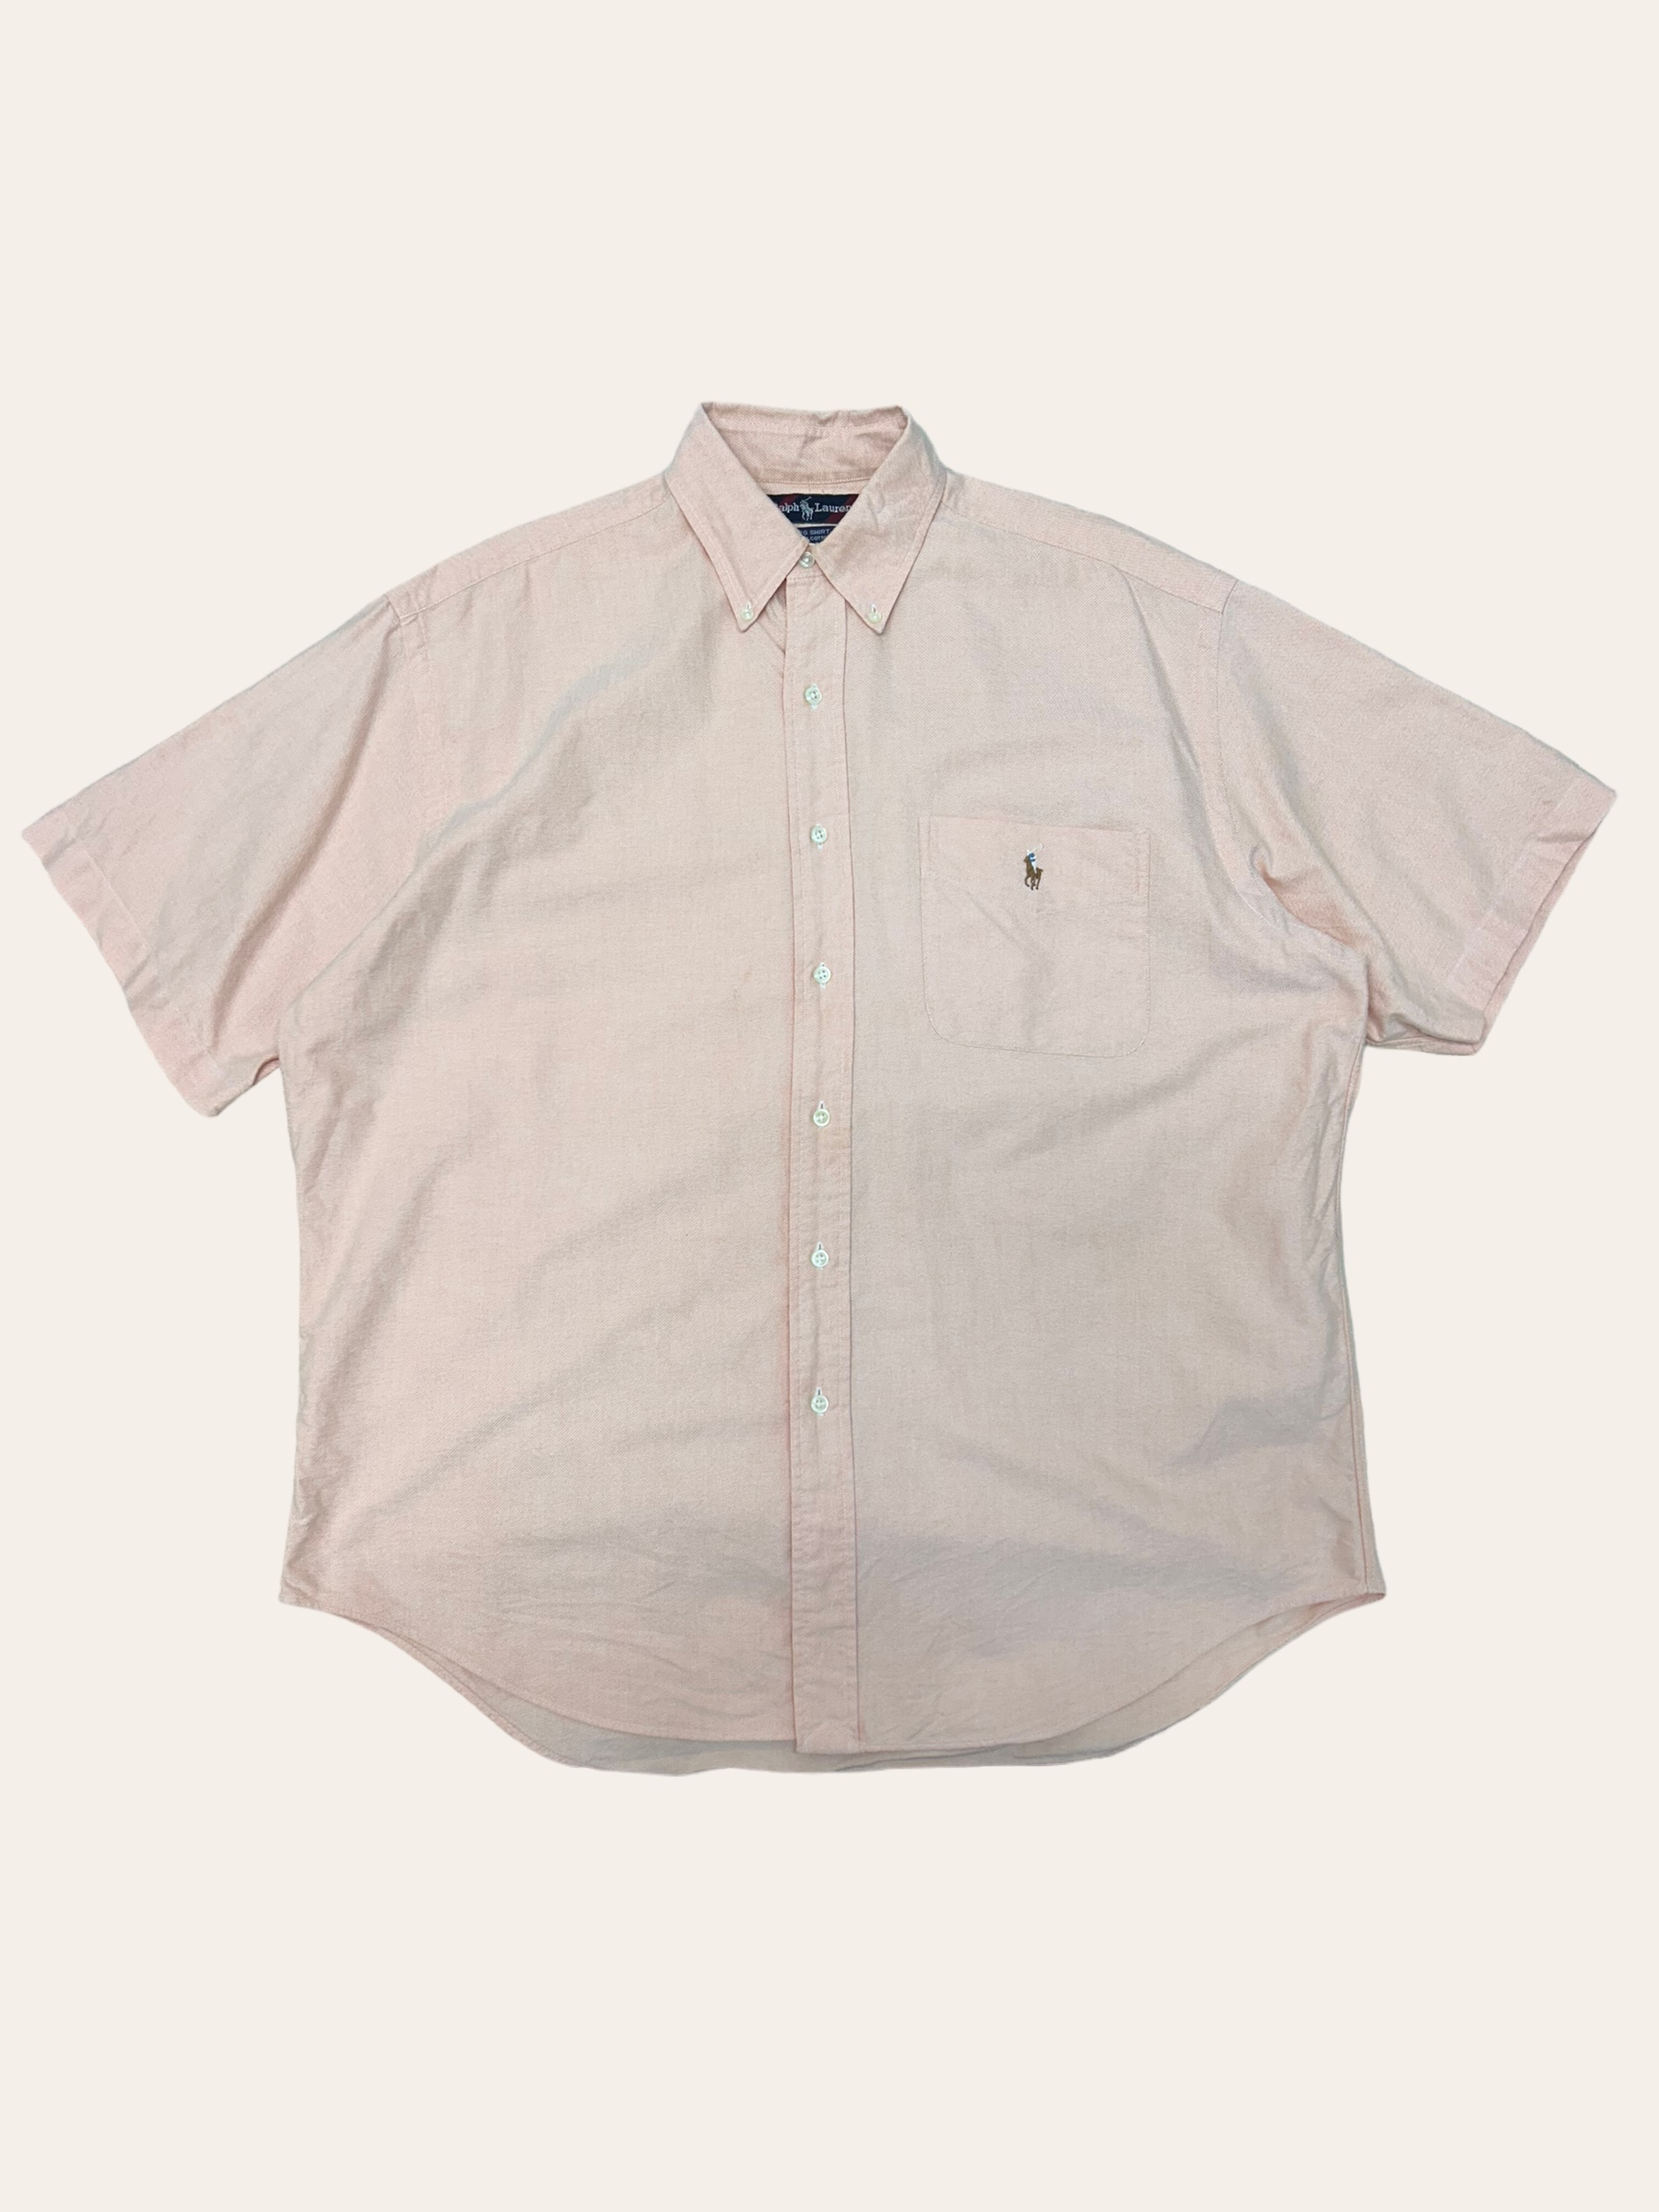 (From USA)Polo ralph lauren peach color oxford short sleeve BIG shirt M